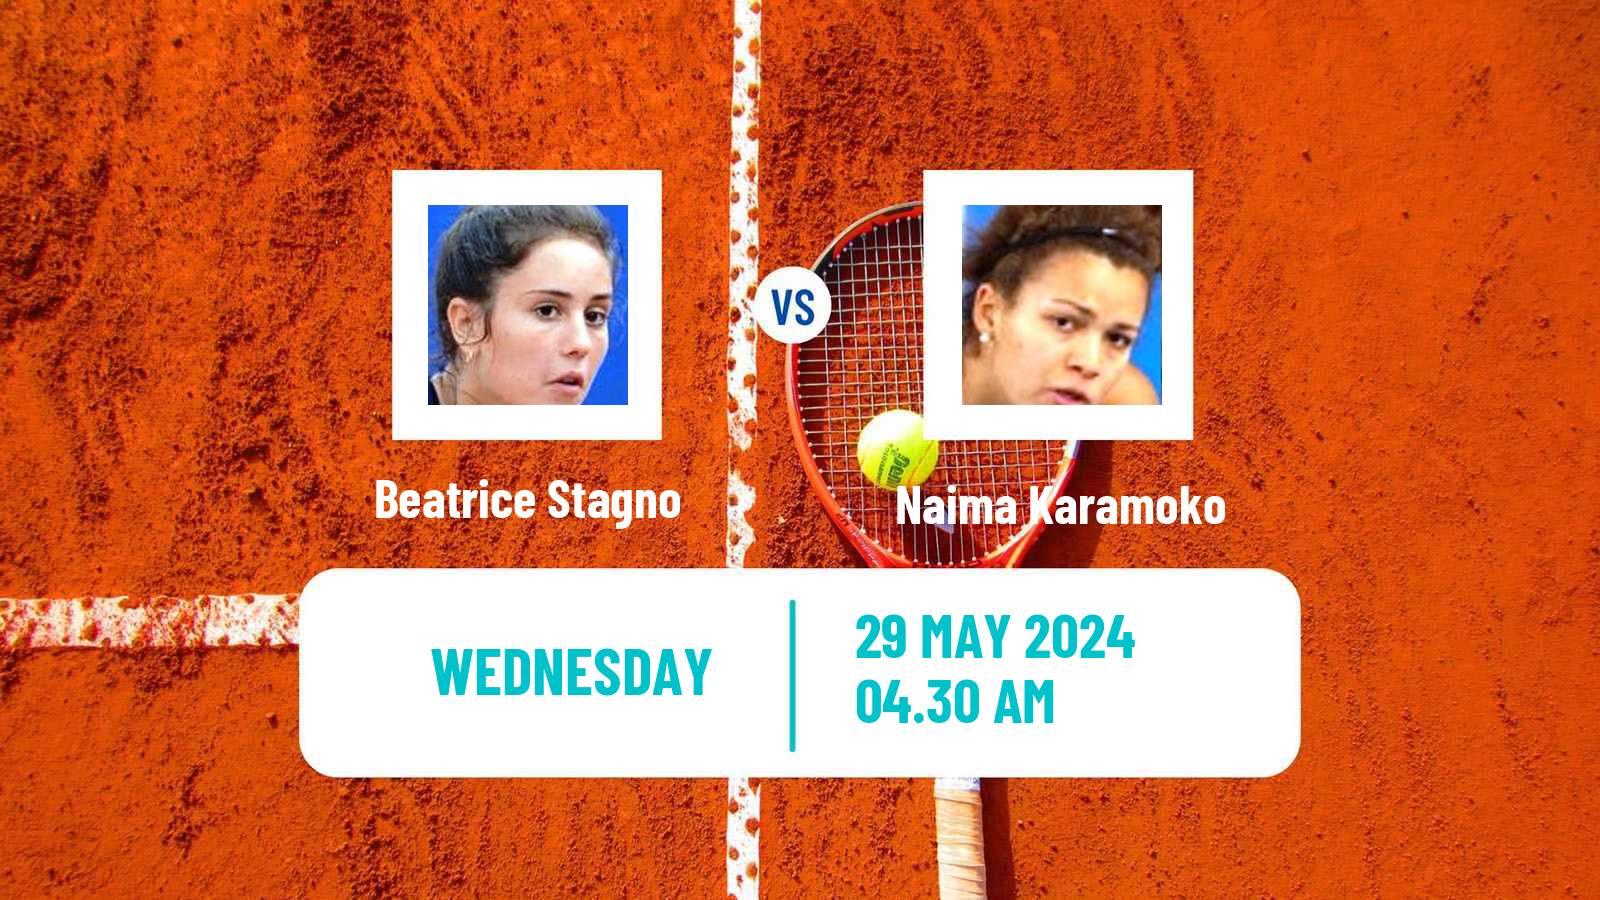 Tennis ITF W15 Monastir 20 Women Beatrice Stagno - Naima Karamoko